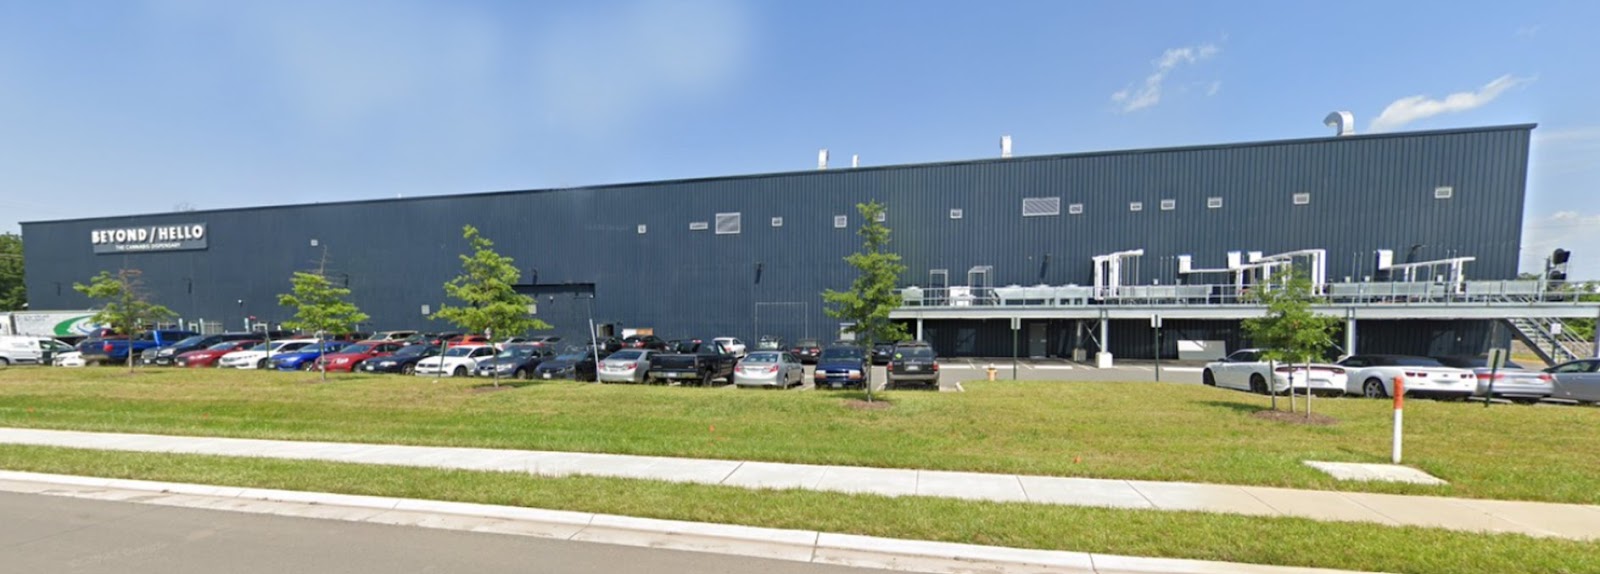 Dalitso Cannabis Processing Facility, Manassas, VA - Texas Pre-Engineered Steel Buildings | Prefab Metal Building FAQ